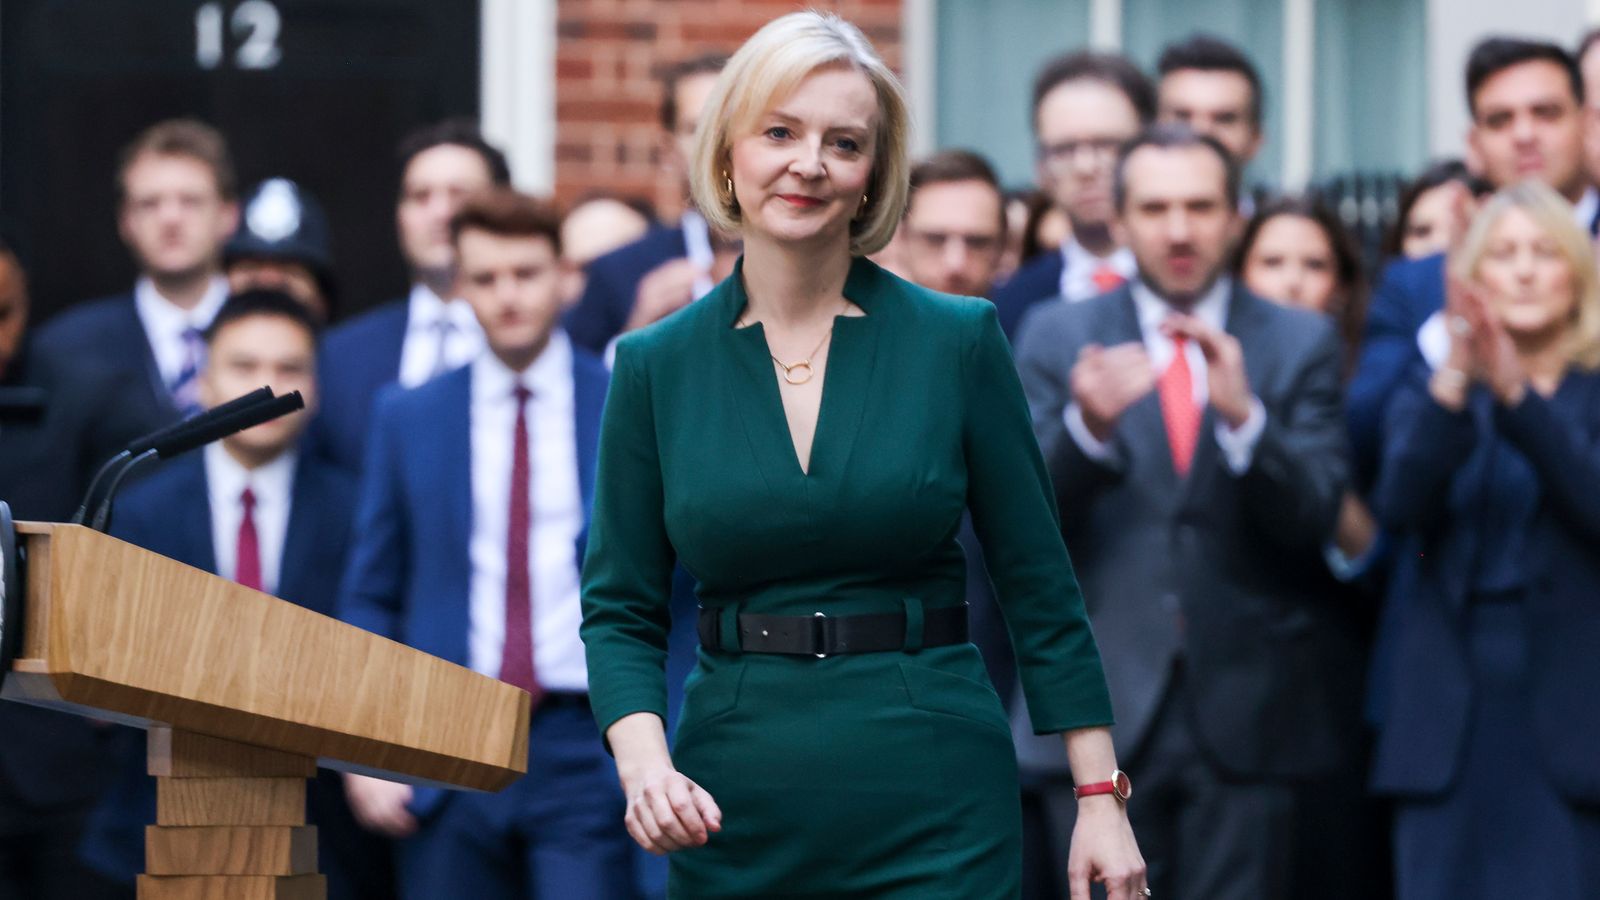 'I know brighter days lie ahead': Liz Truss bids farewell to Downing Street